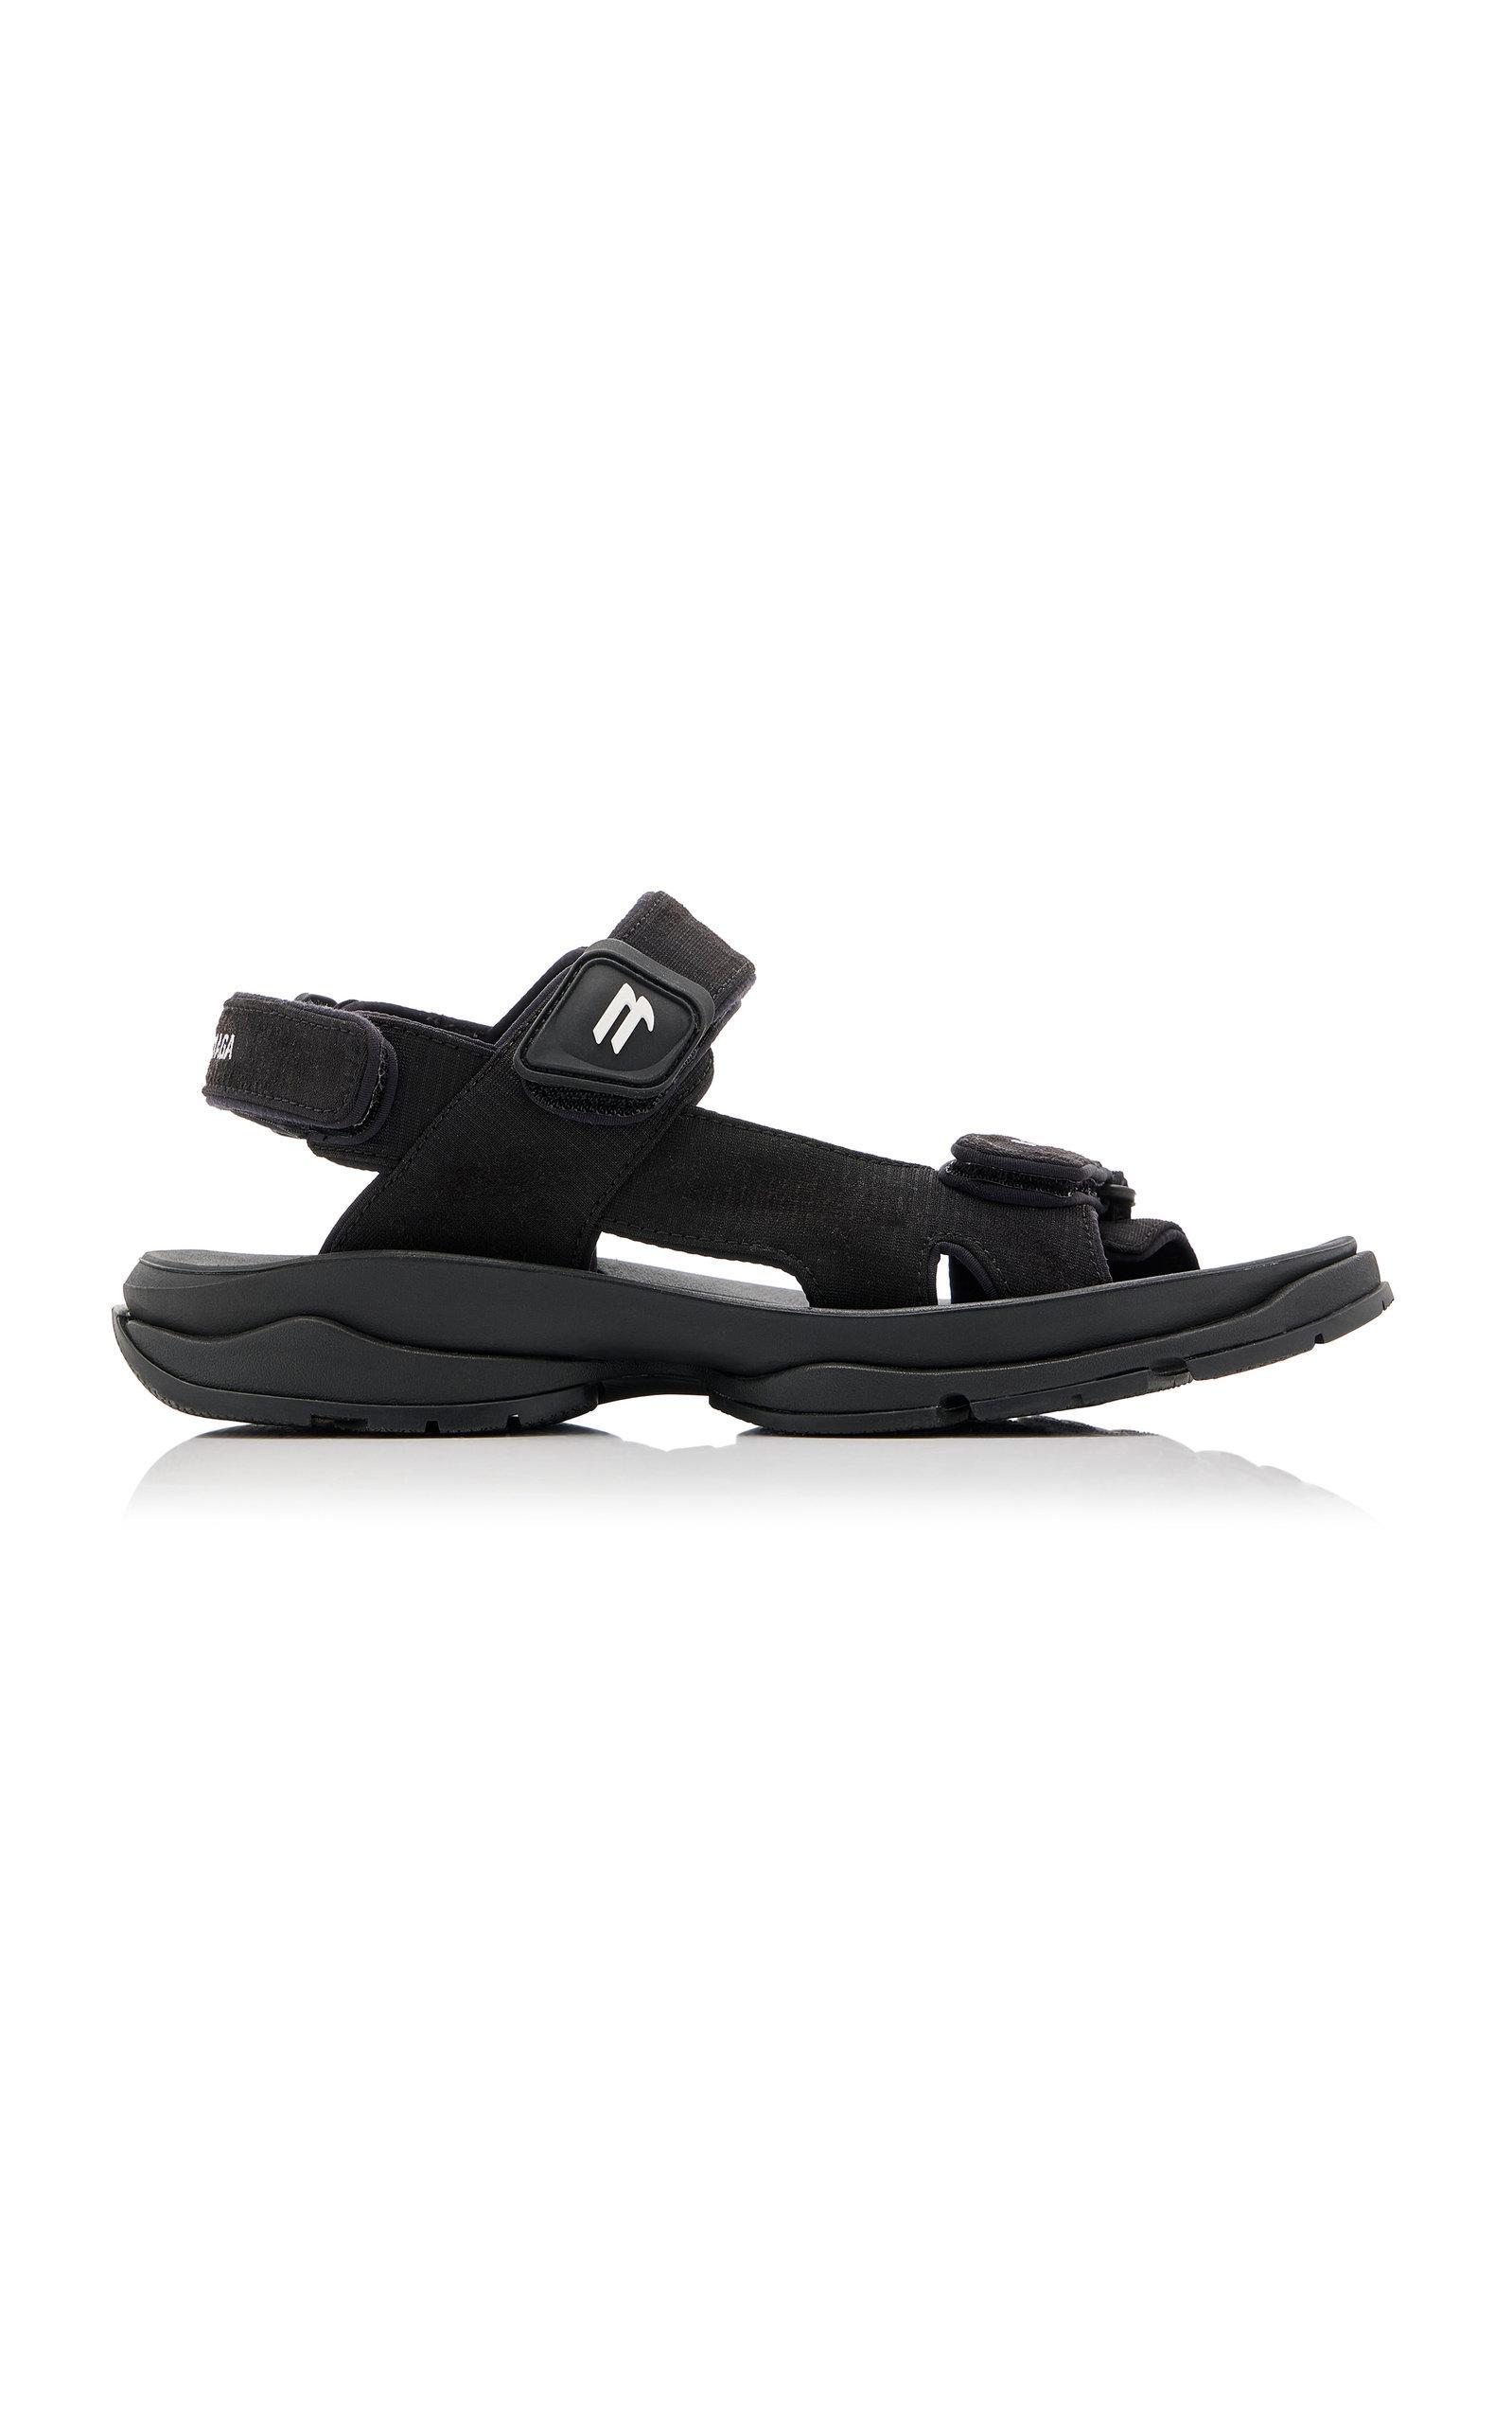 Balenciaga - Tourist Strap Sandals - Black - IT 39 - Moda Operandi Product Image